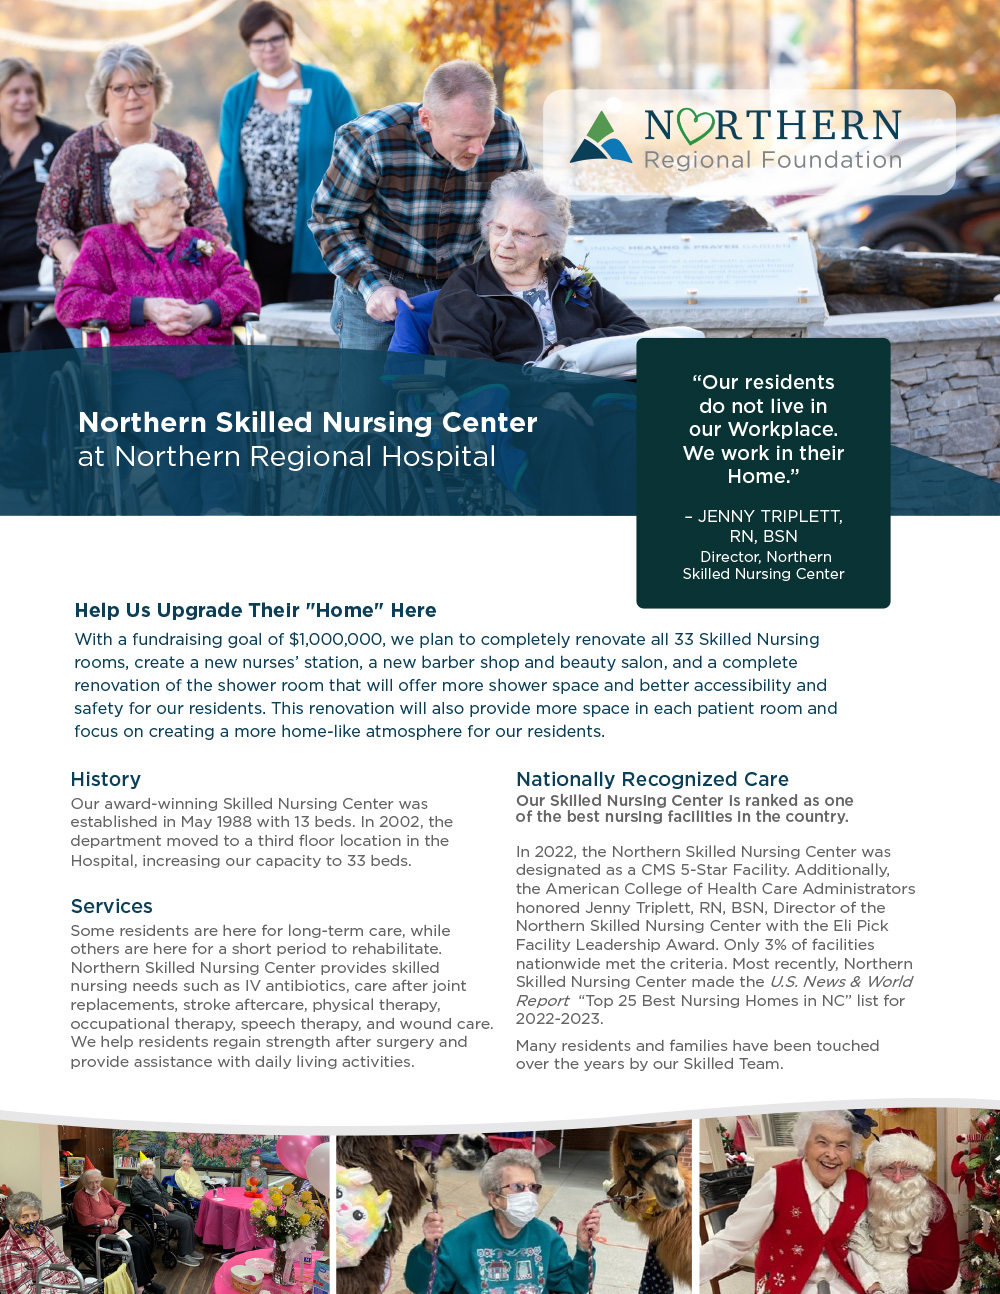 Northern Regional Foundation - Skilled Nursing Center